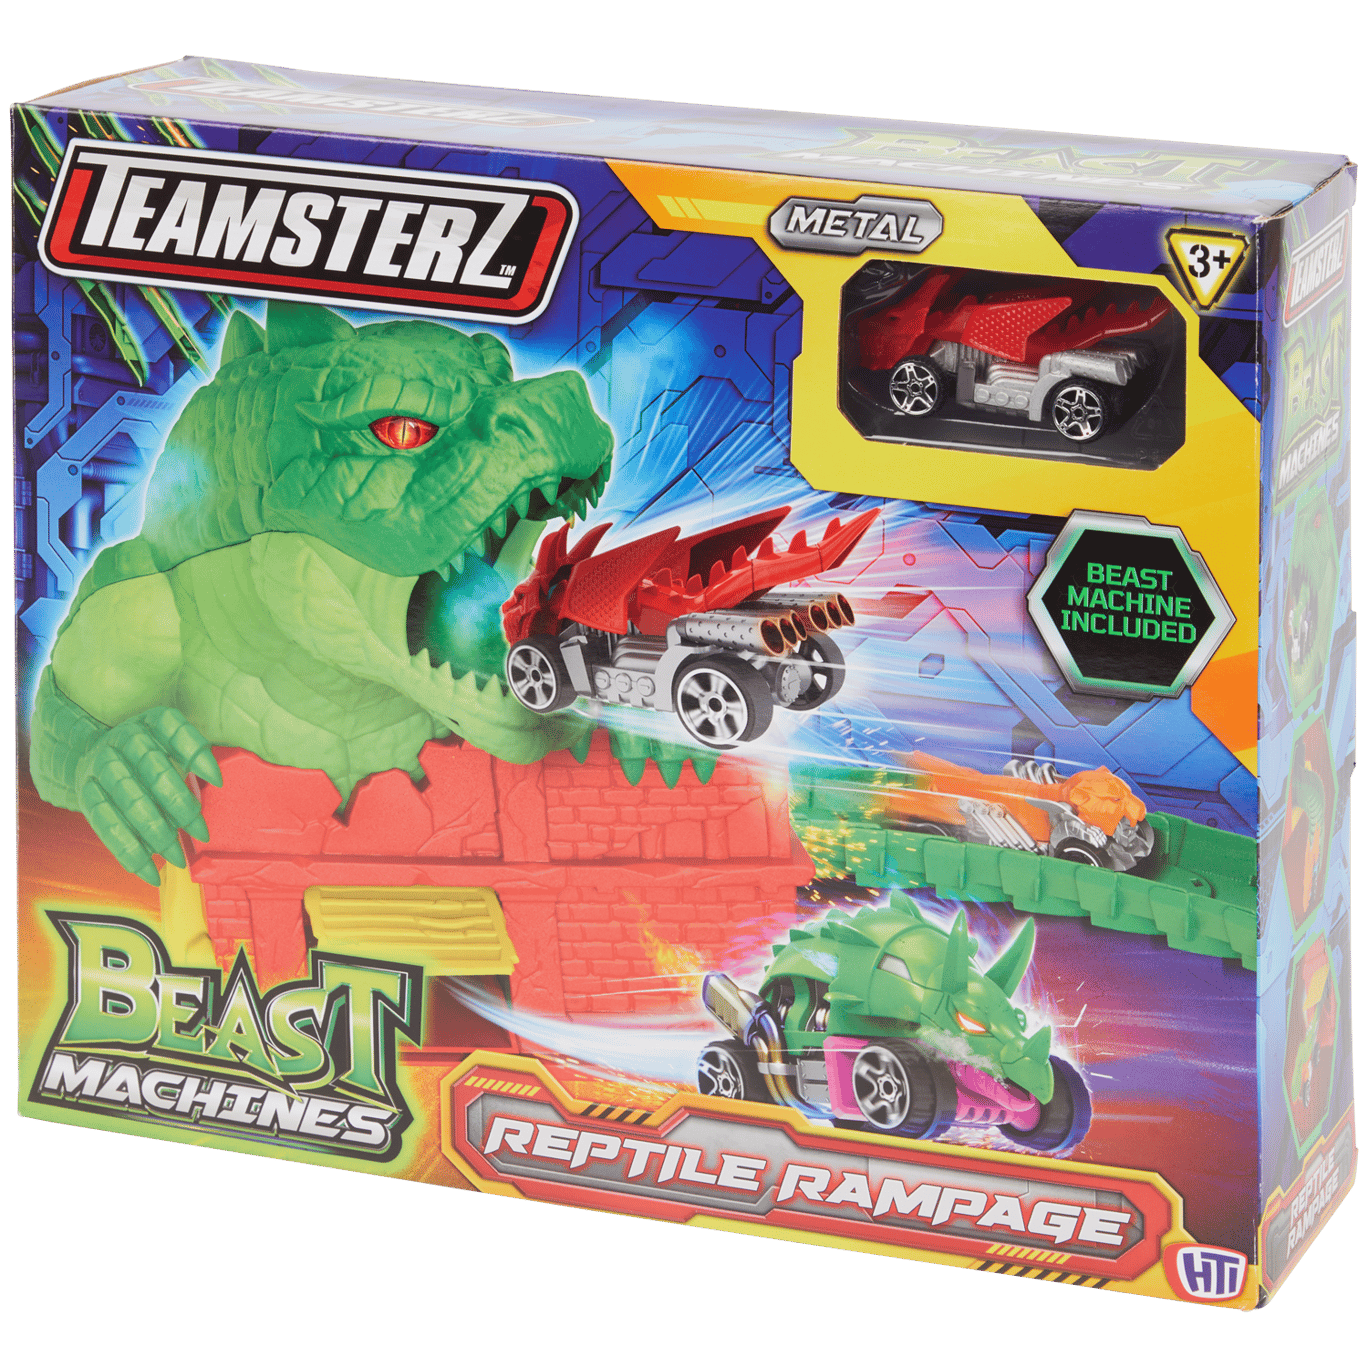 Teamsterz Beast Machines Spielset